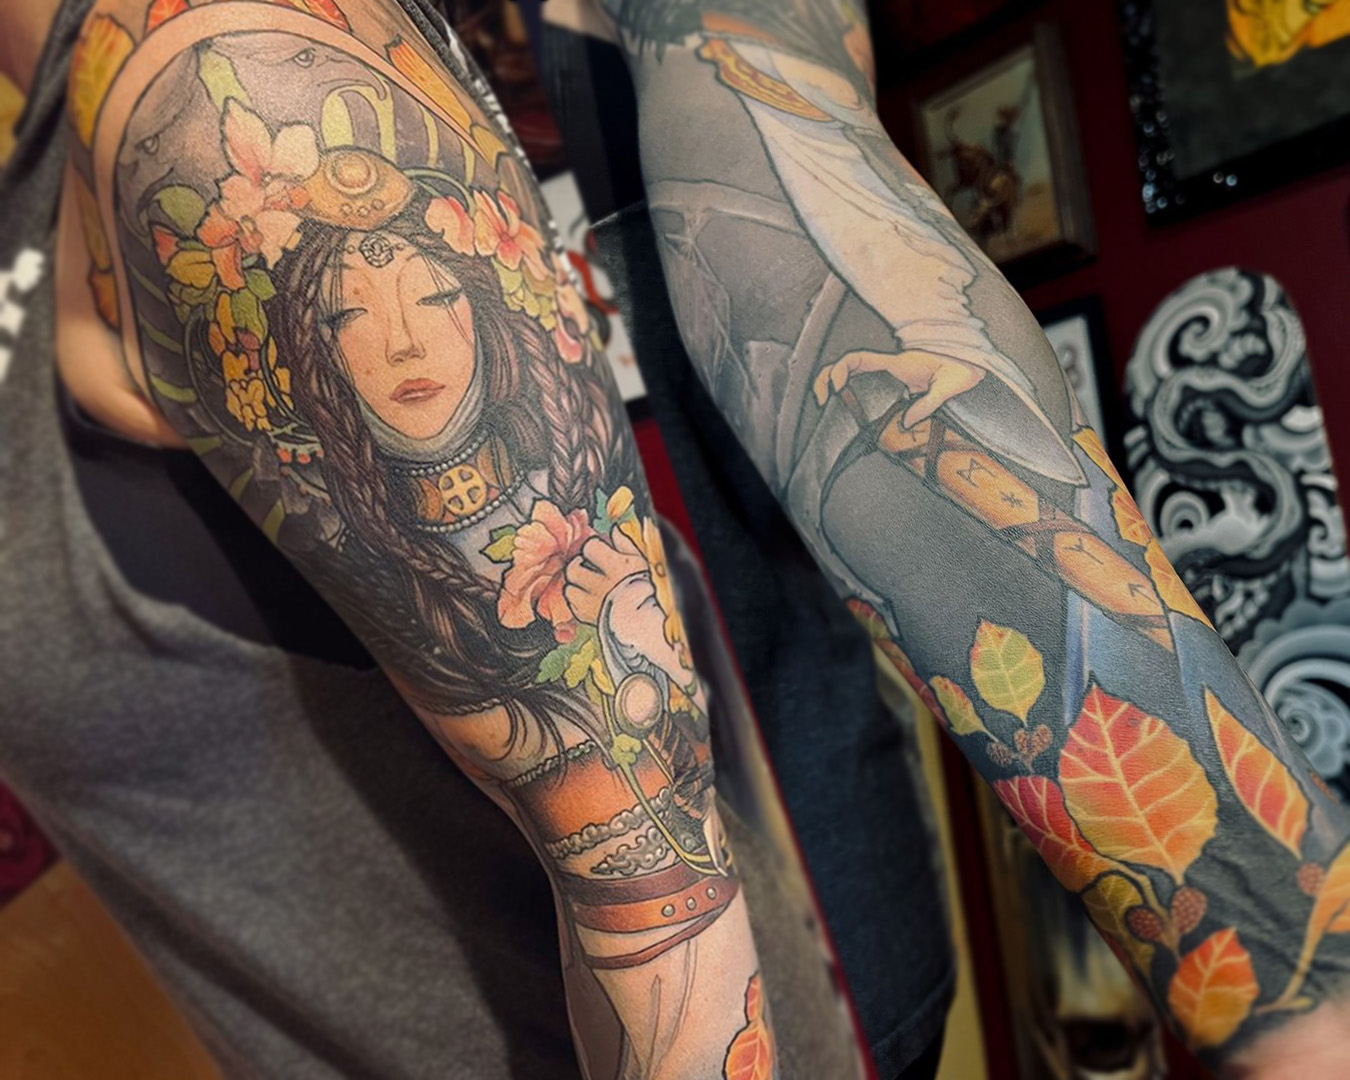 Jeff gogue arm sleeve tattoo, viking norse woman